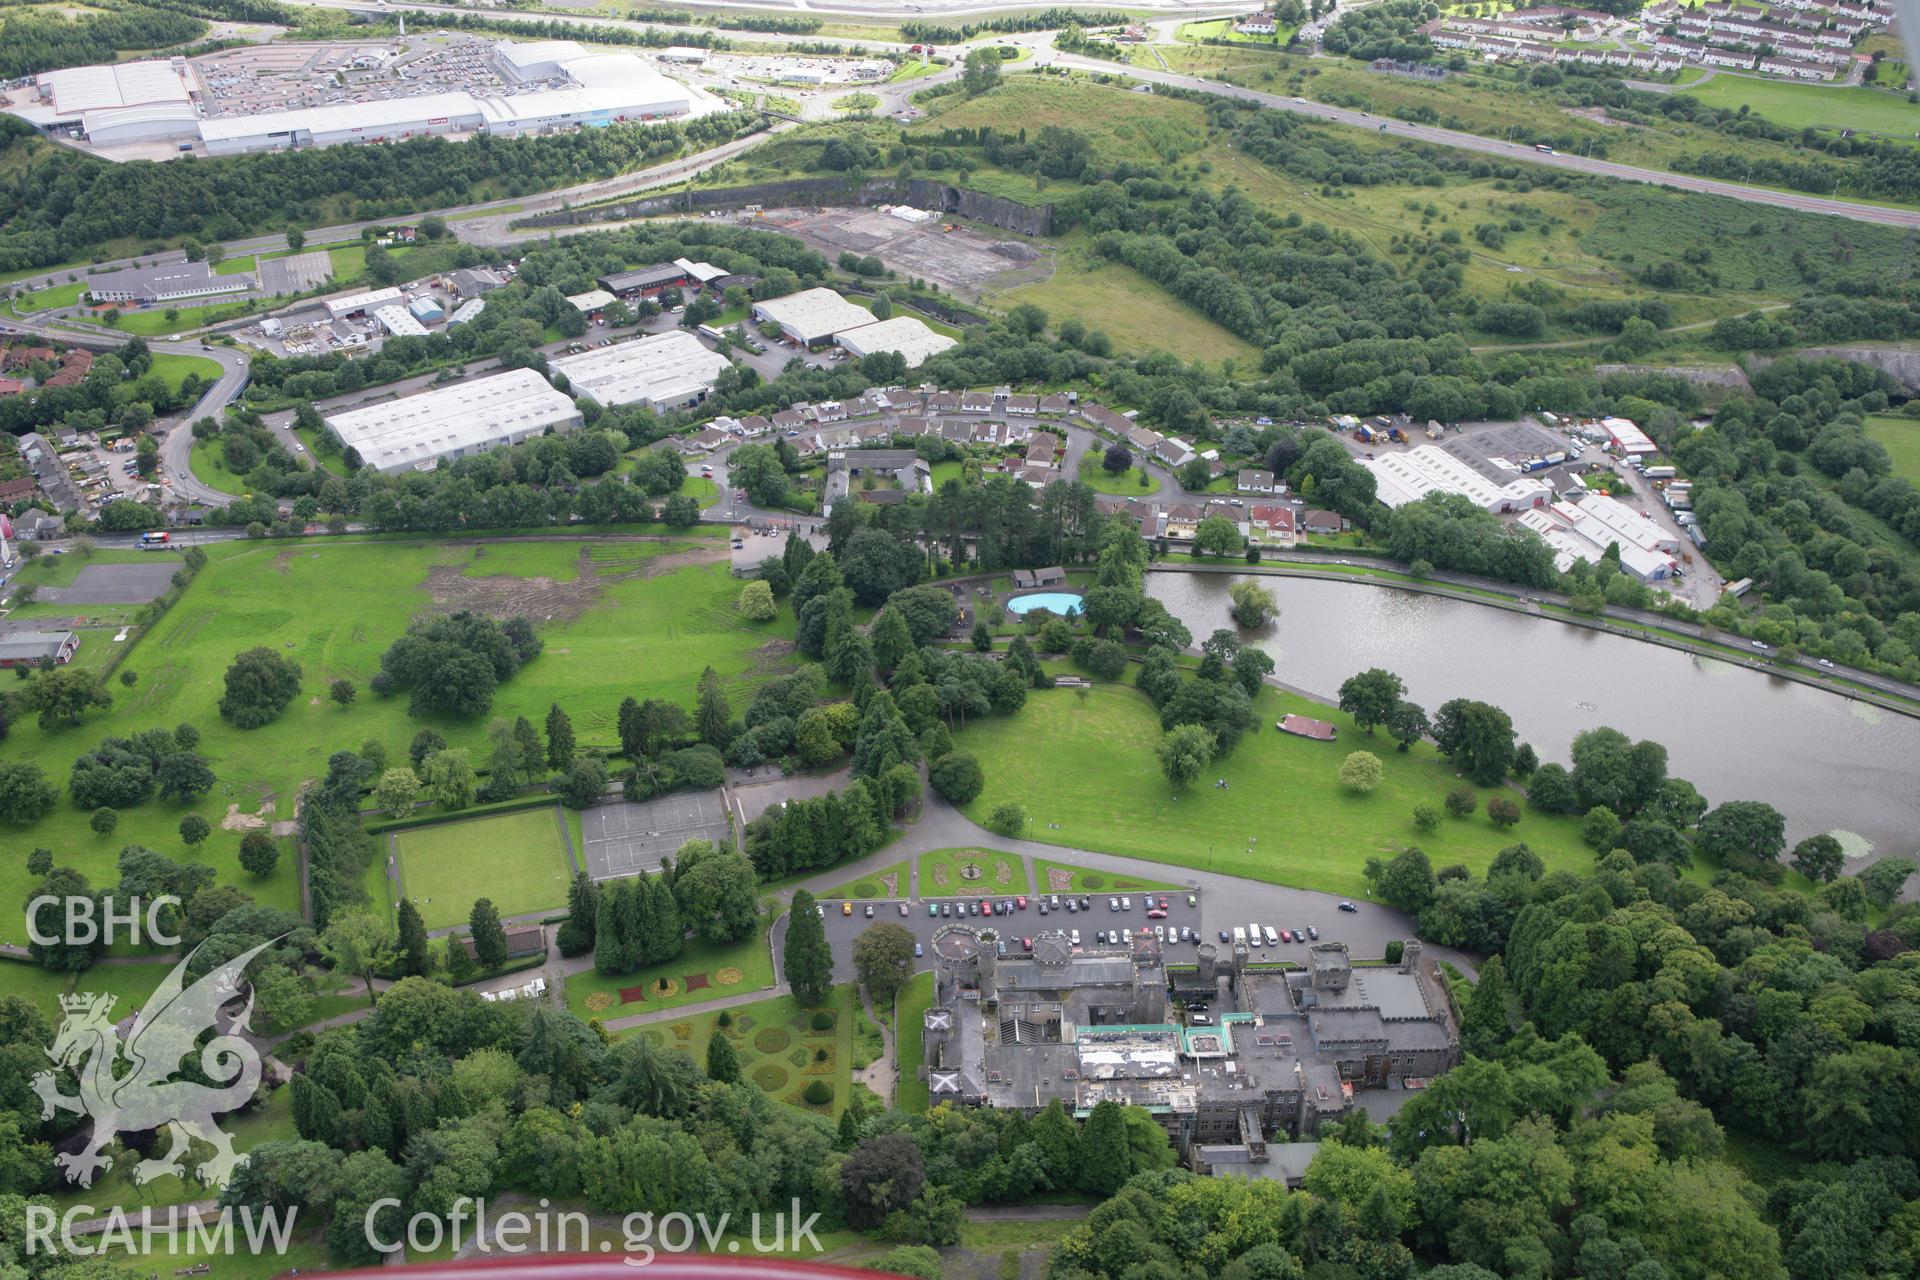 RCAHMW colour oblique aerial photograph of Cyfarthfa Castle, Merthyr Tydfil. Taken on 30 July 2007 by Toby Driver